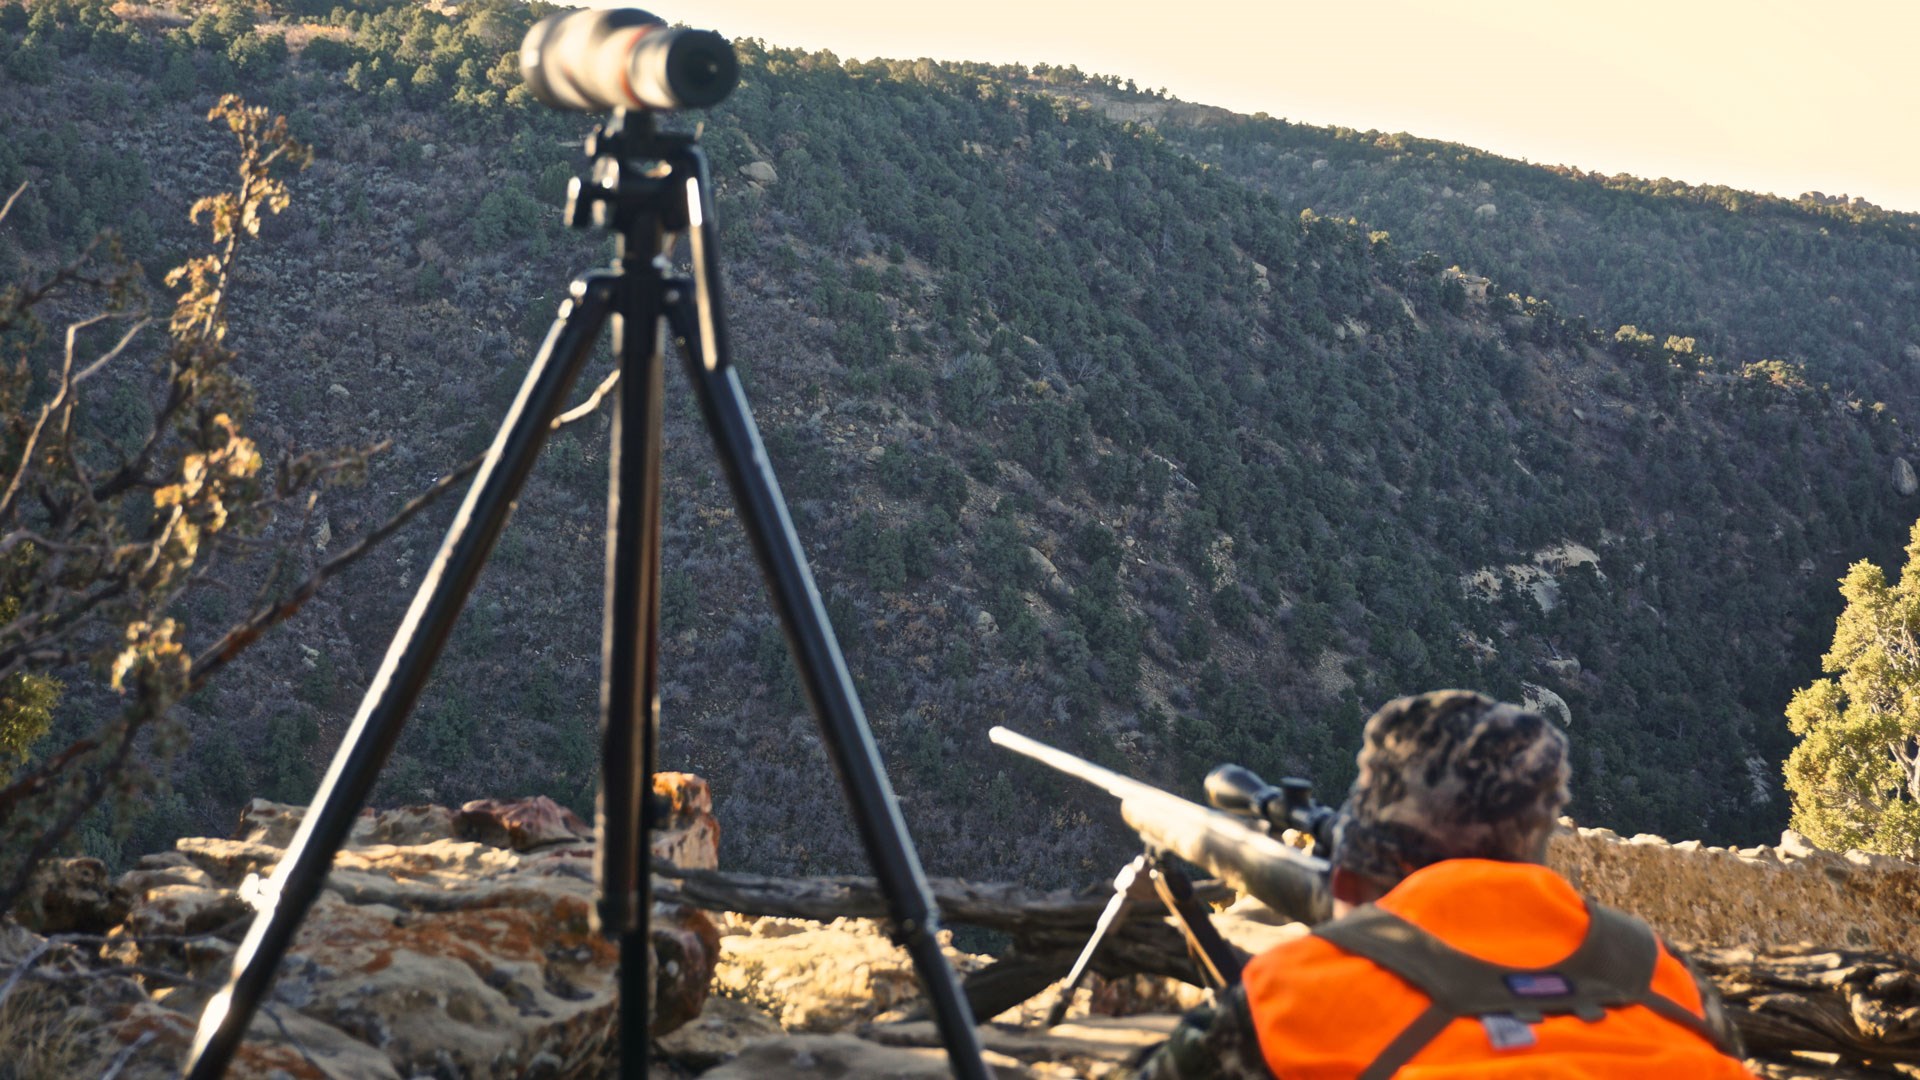 Shooter lying prone by spotting scope